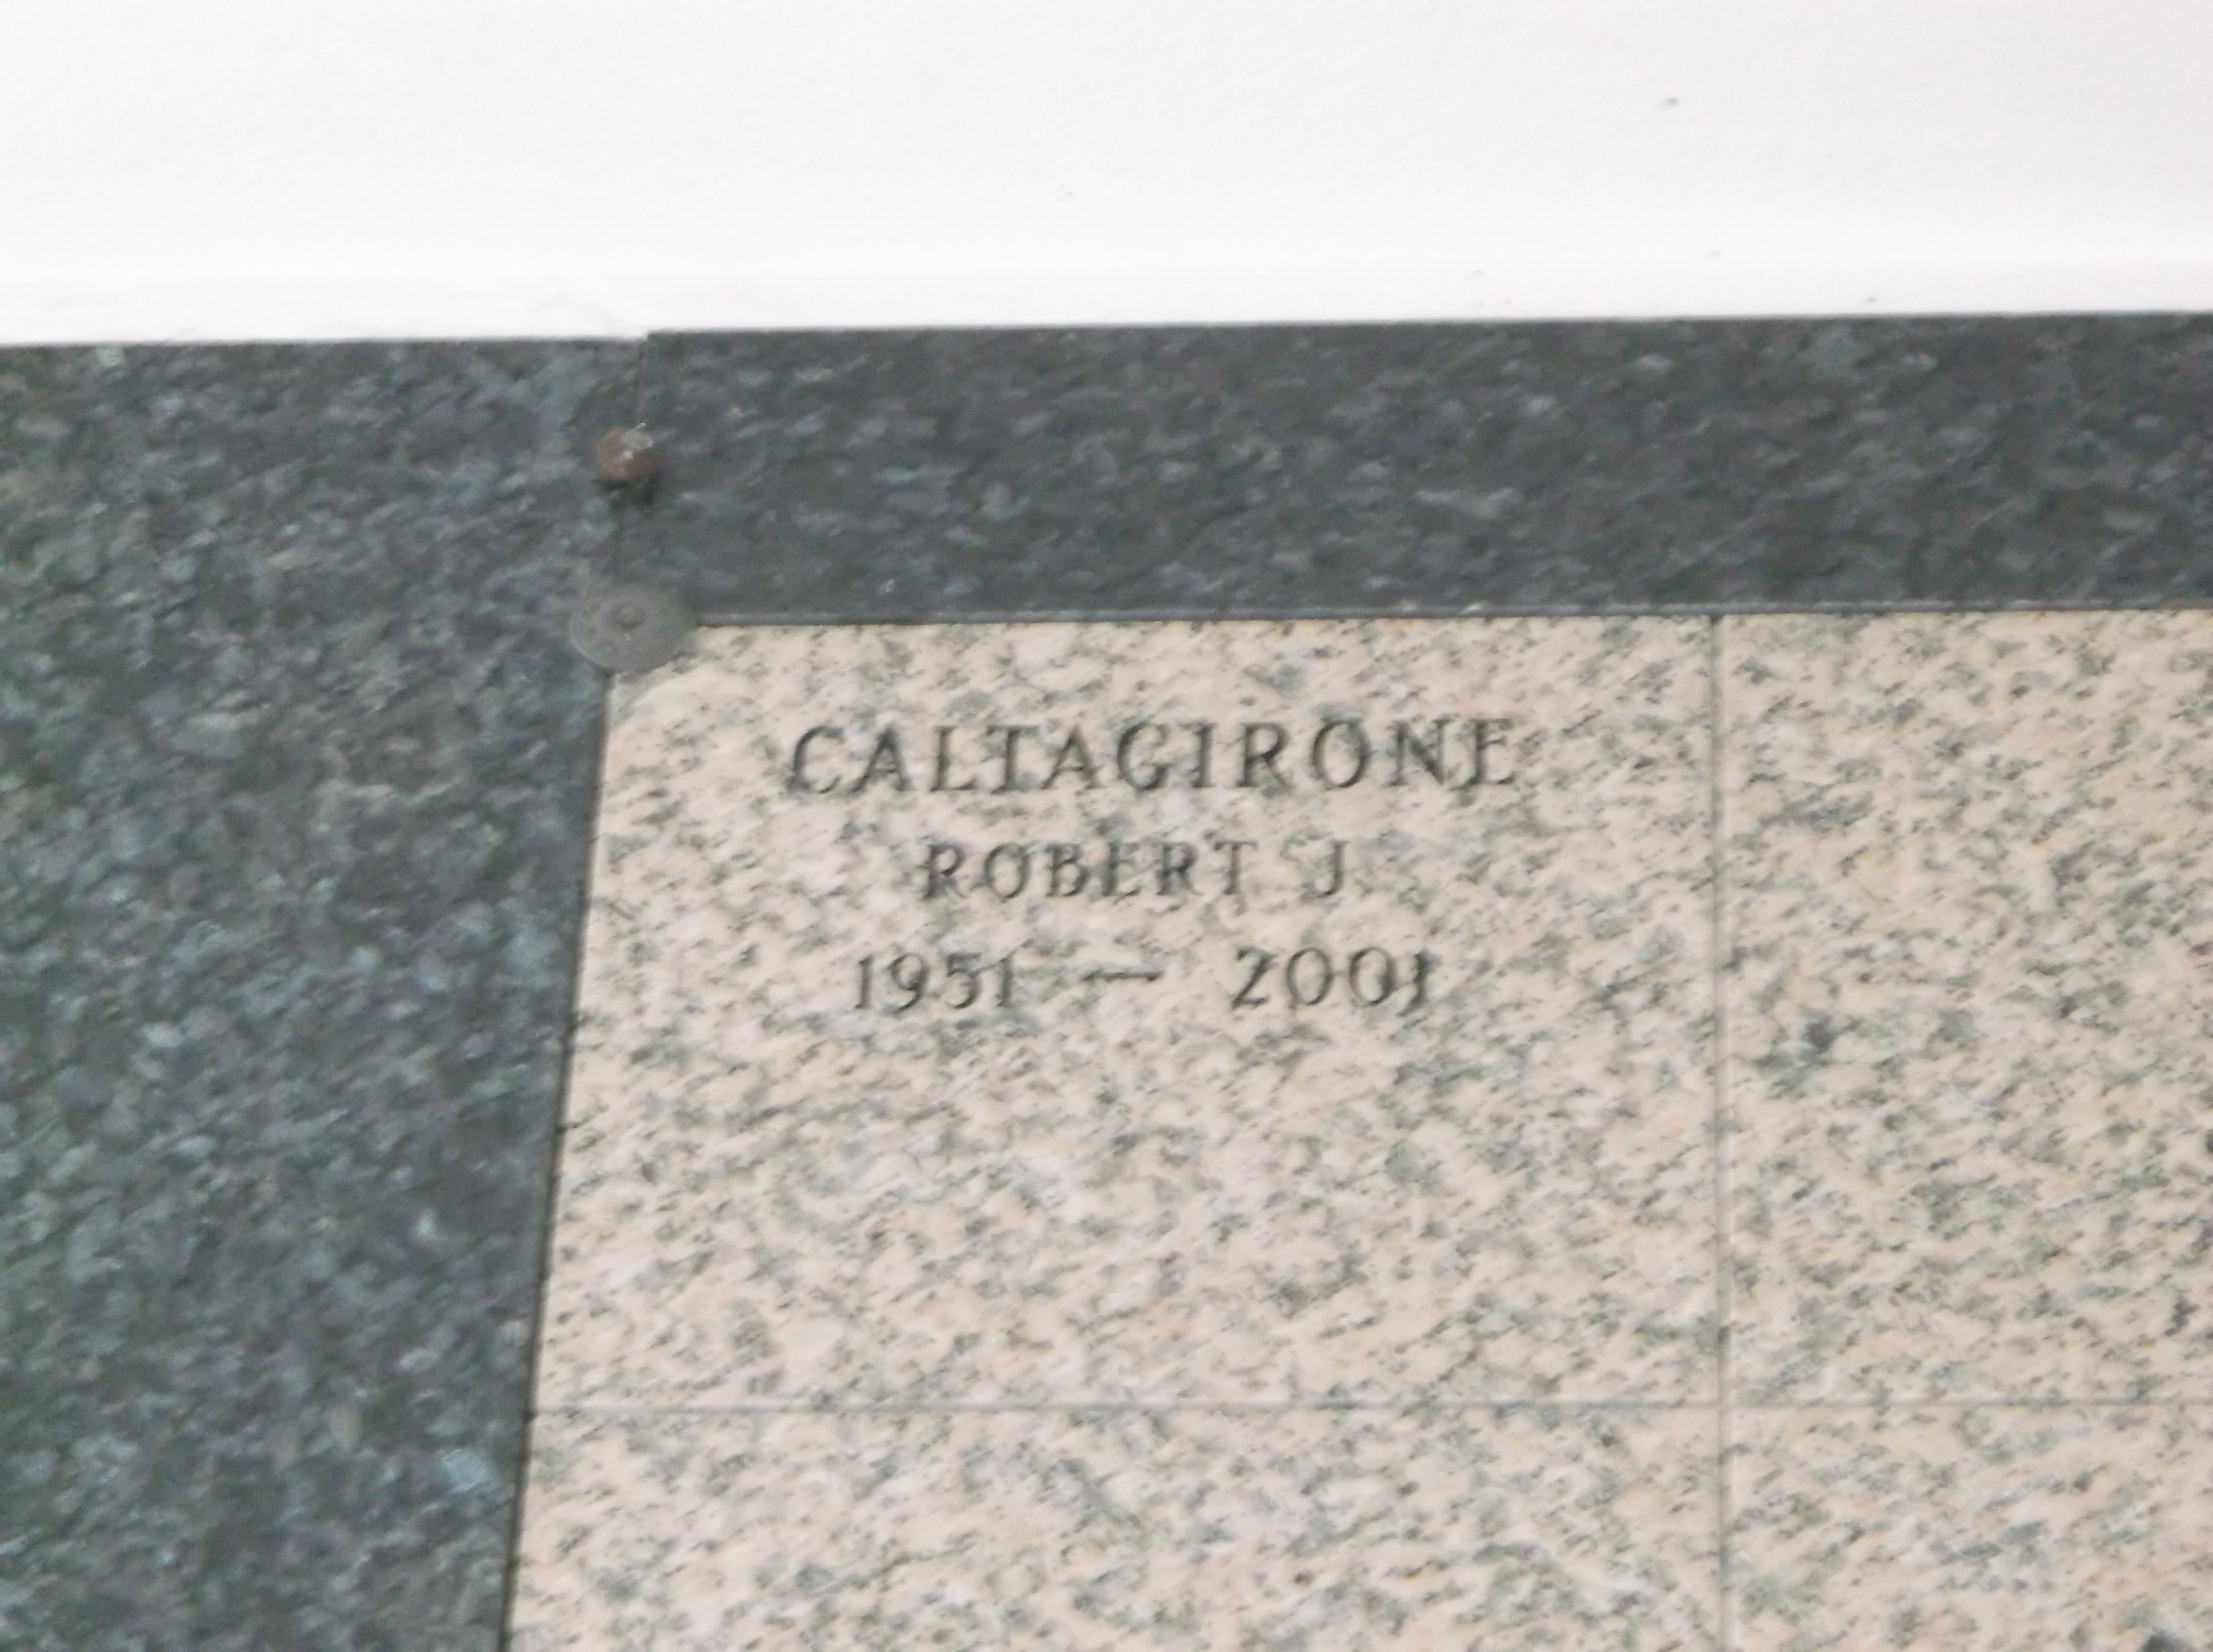 Robert J Caltagirone